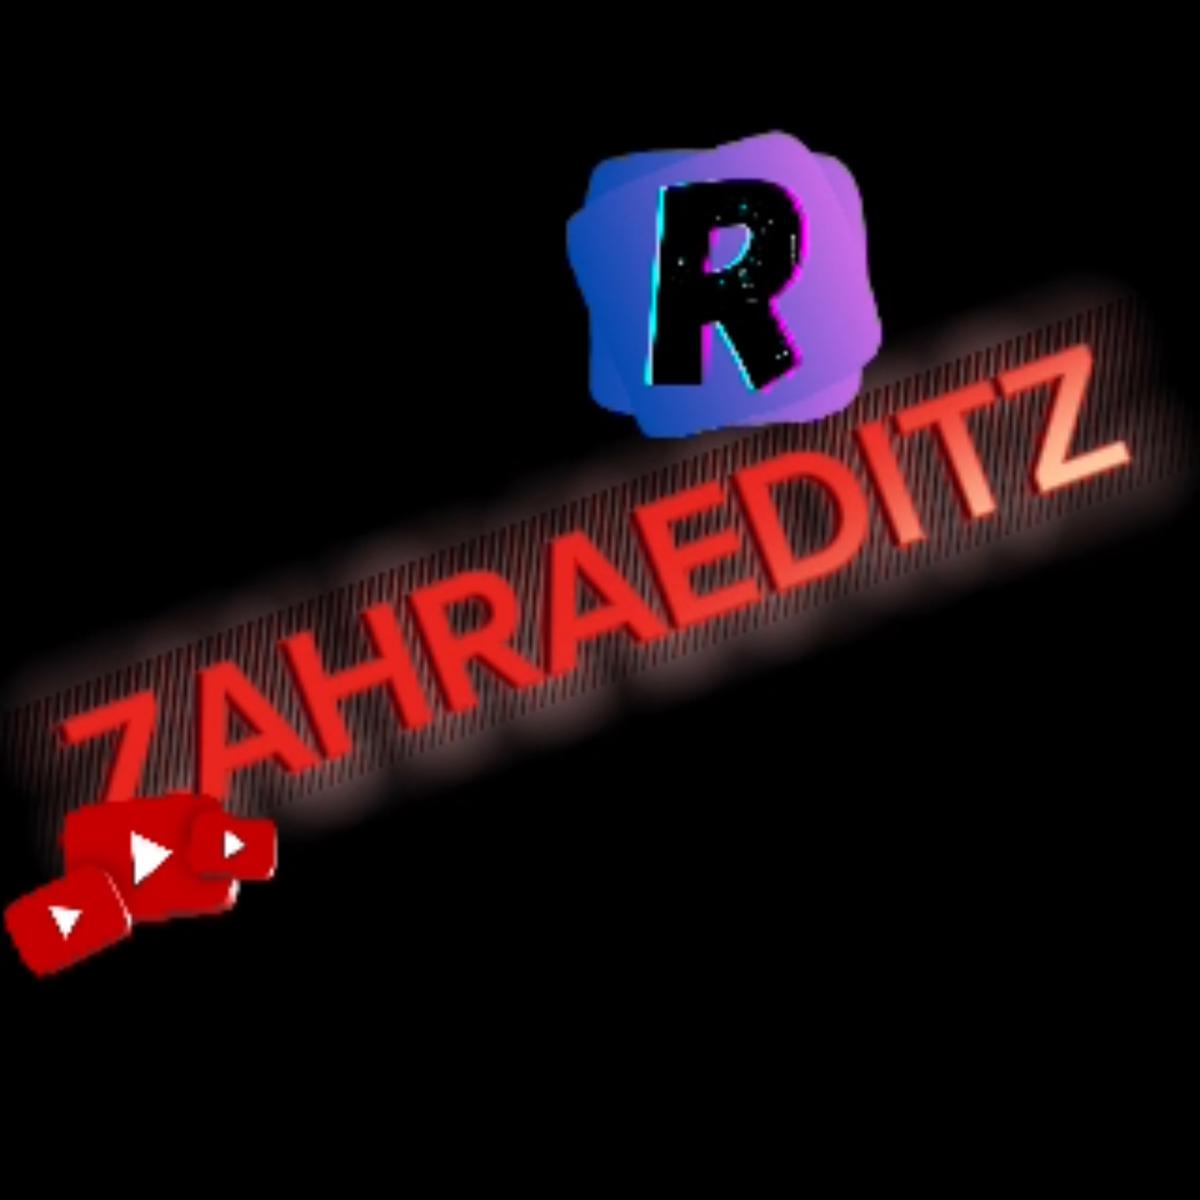 @ZAHRAEDITZ's images